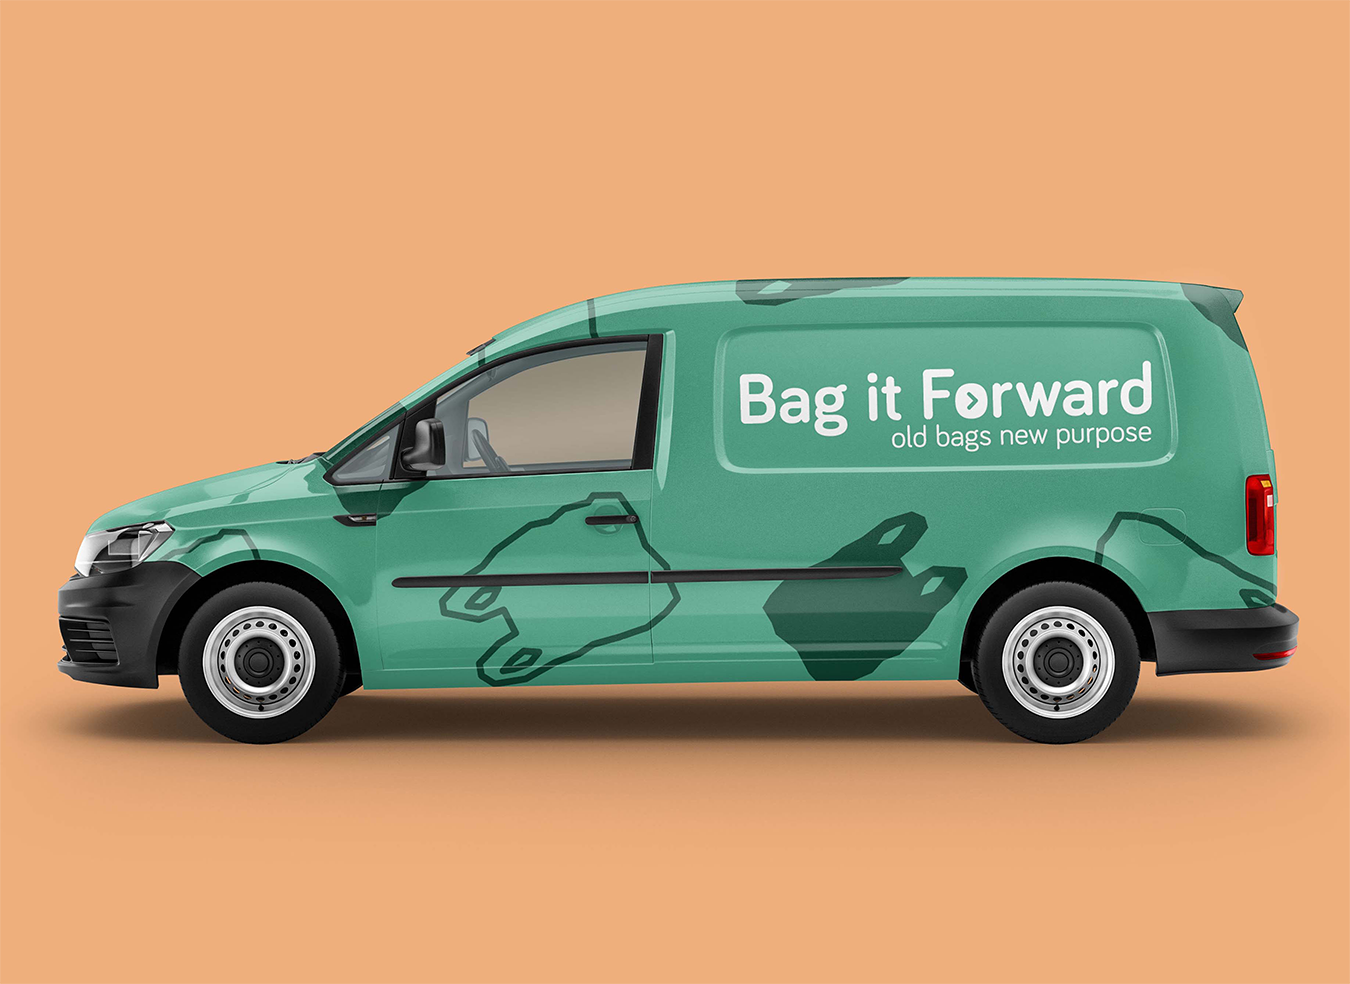 Bag it Forward company truck